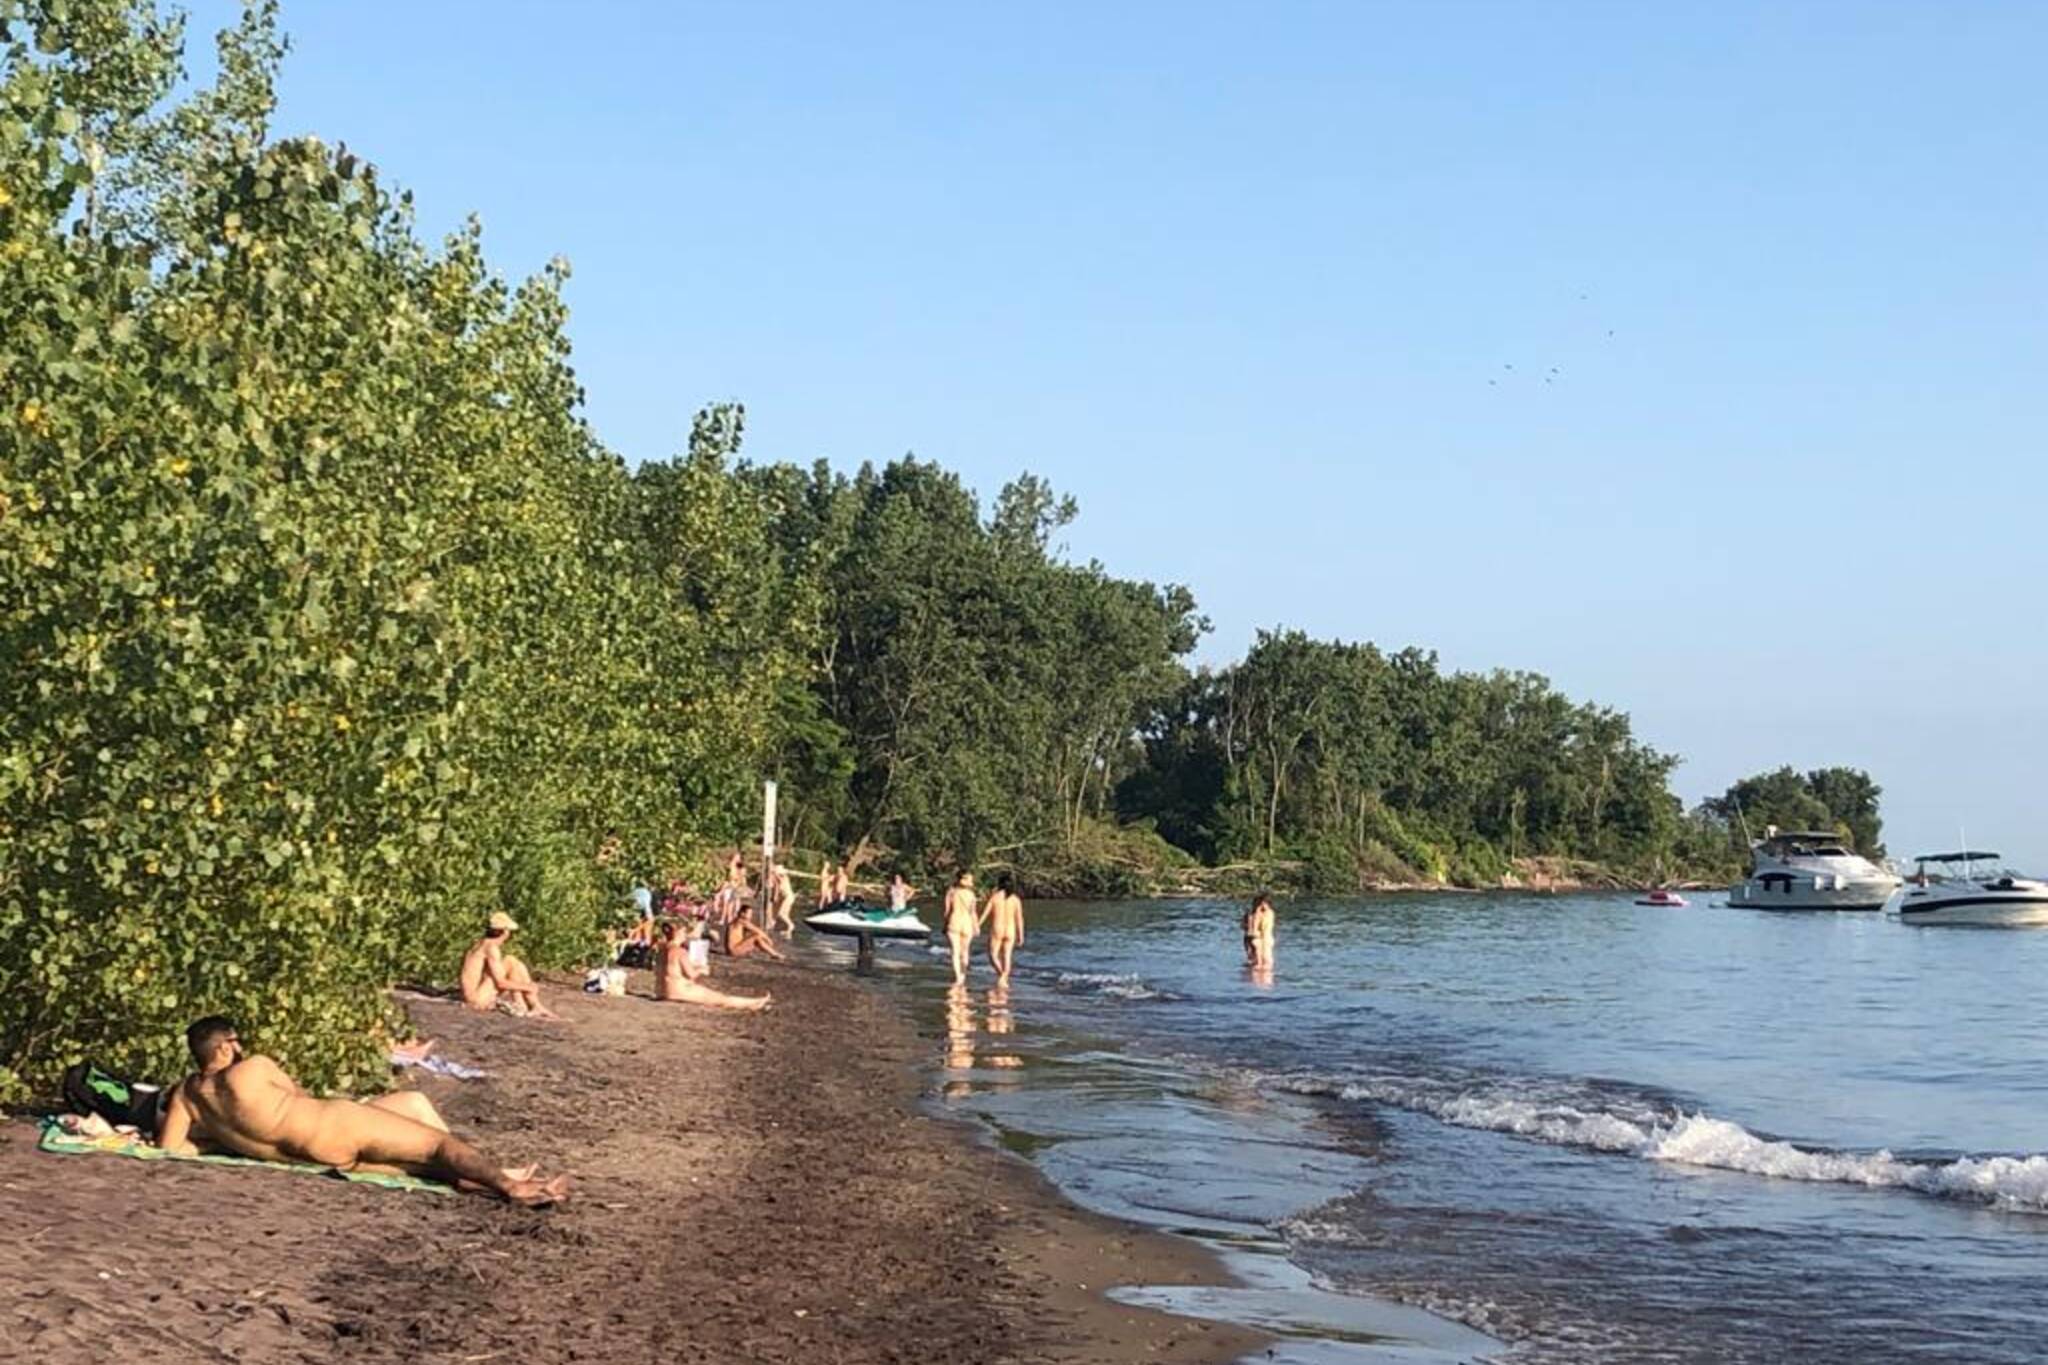 Canadian Nudists Teens - Hanlan's Point is the Toronto Island's famous nude beach